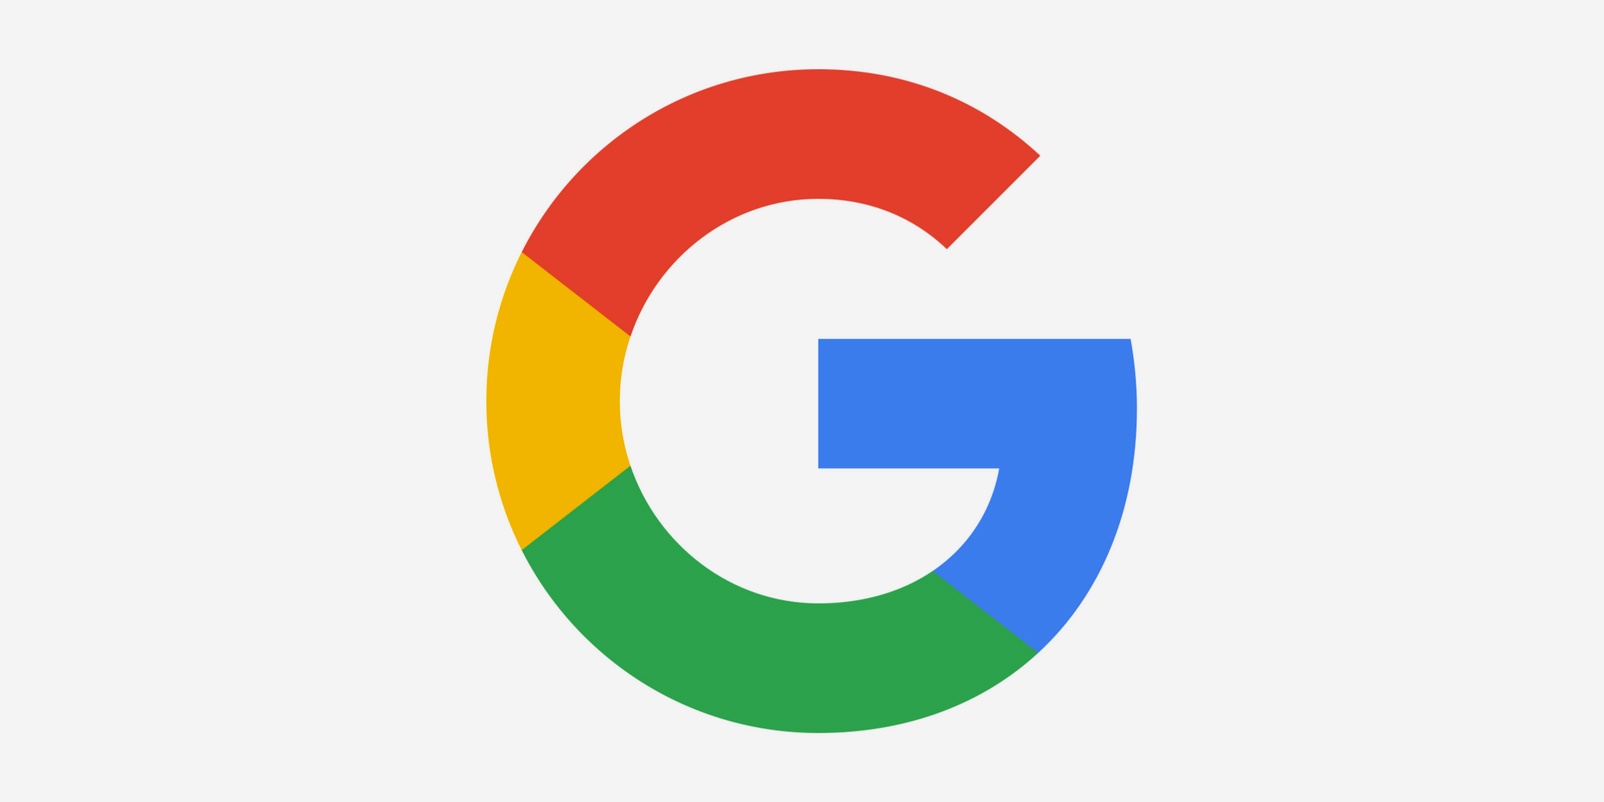 google - youngish but still famous logo